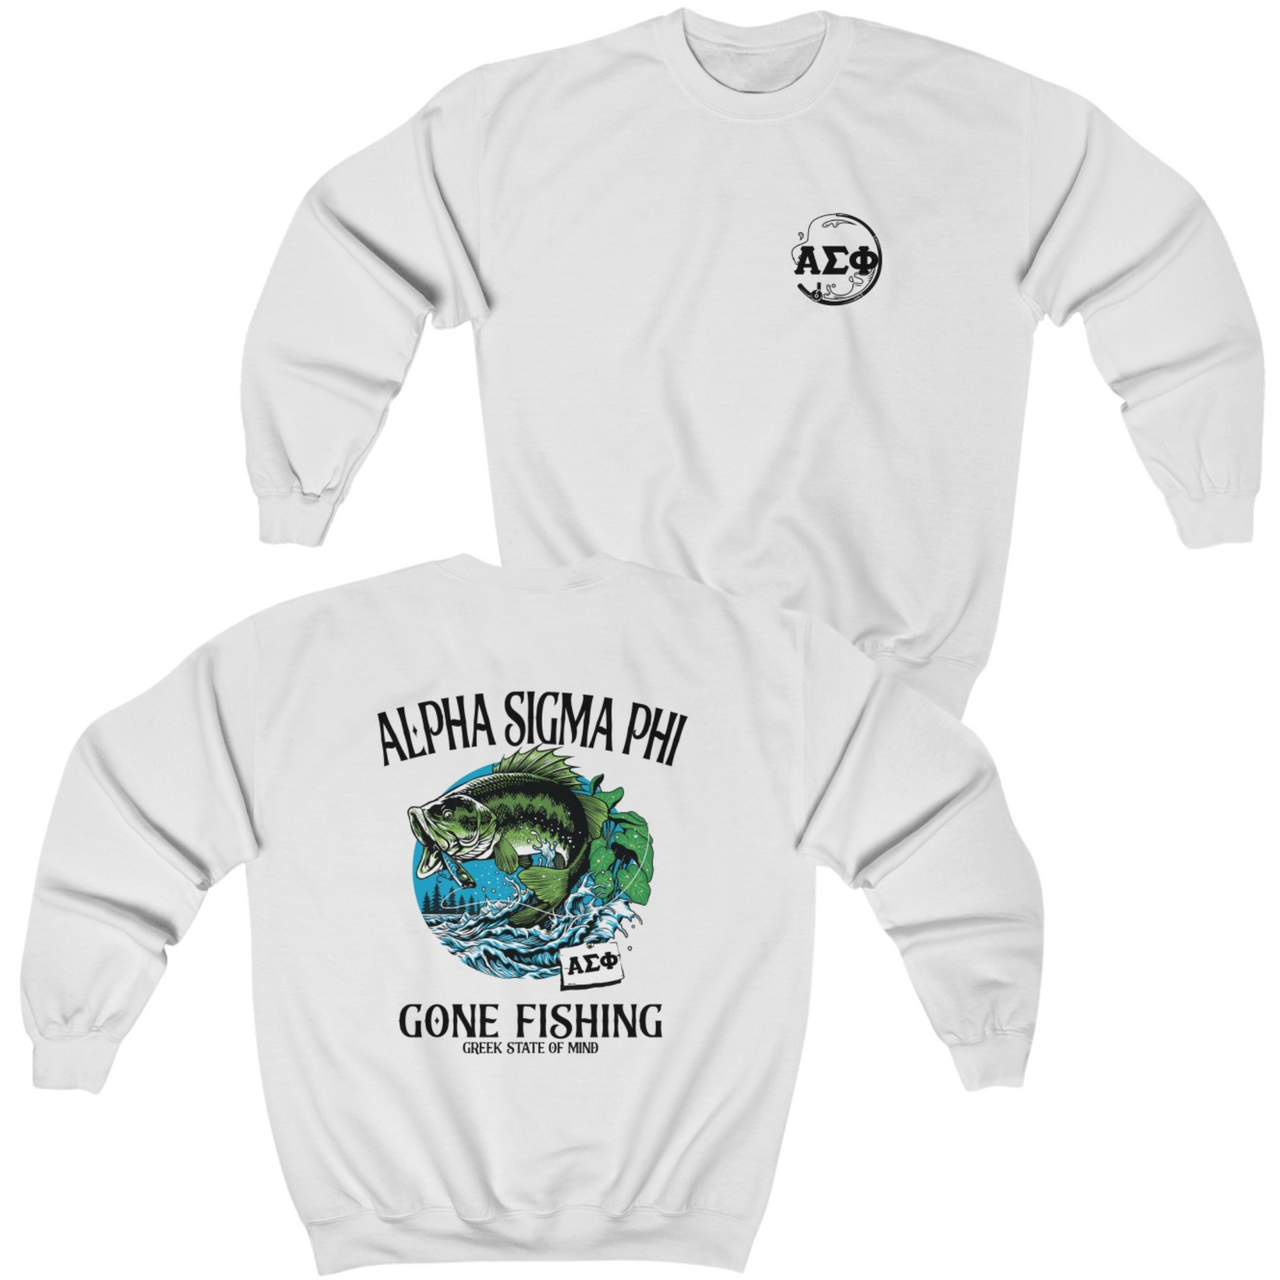 White Alpha Sigma Phi Graphic Crewneck Sweatshirt | Gone Fishing | Alpha Sigma Phi Fraternity Shirt 